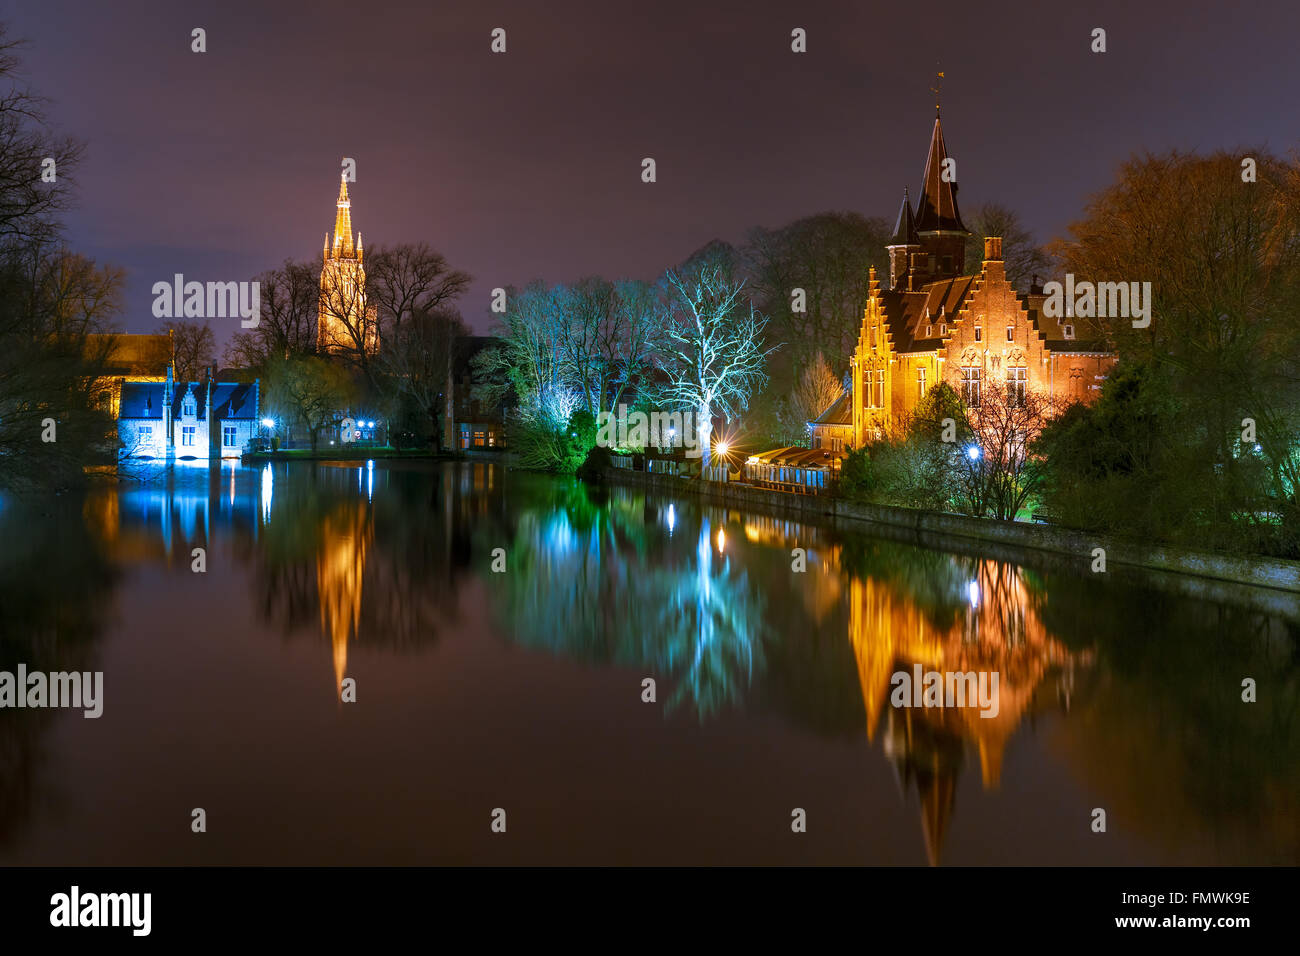 Notte da favola Lago Minnewater a Bruges, Belgio Foto Stock